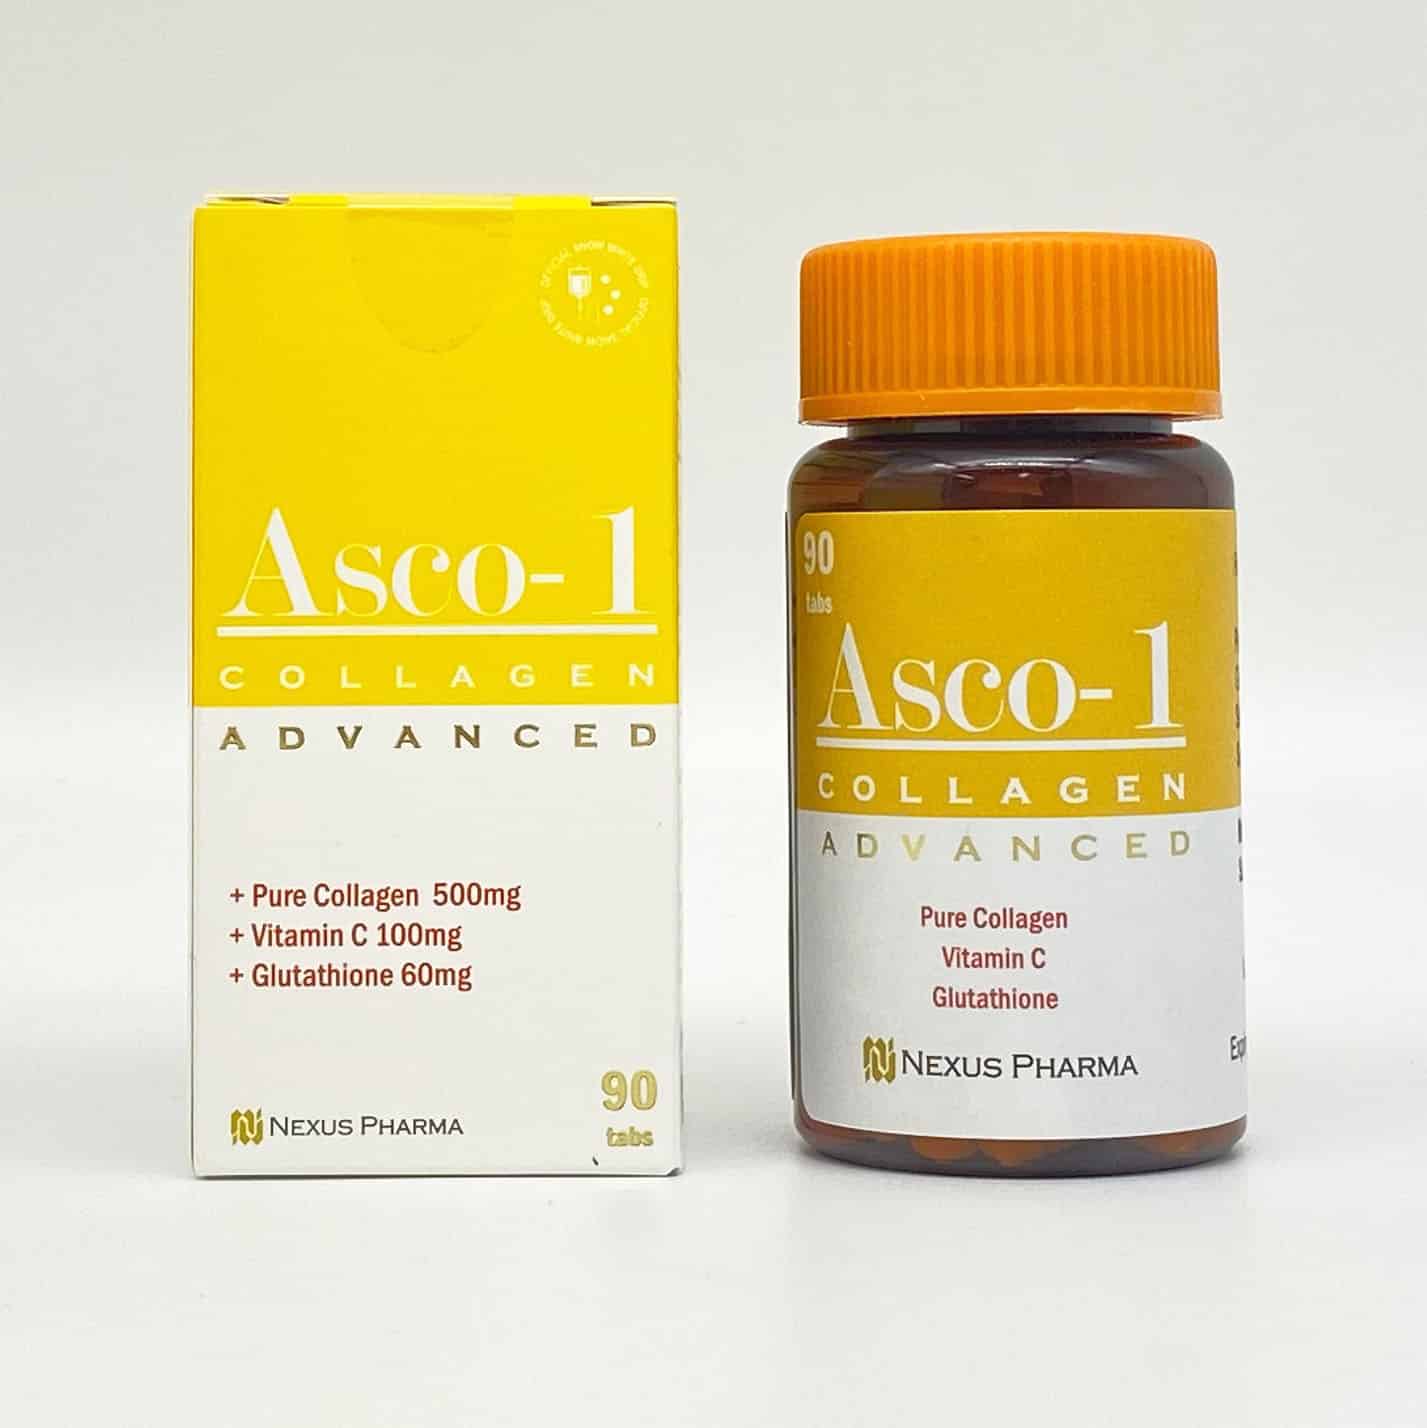 Asco-1 collagen advanced tablets